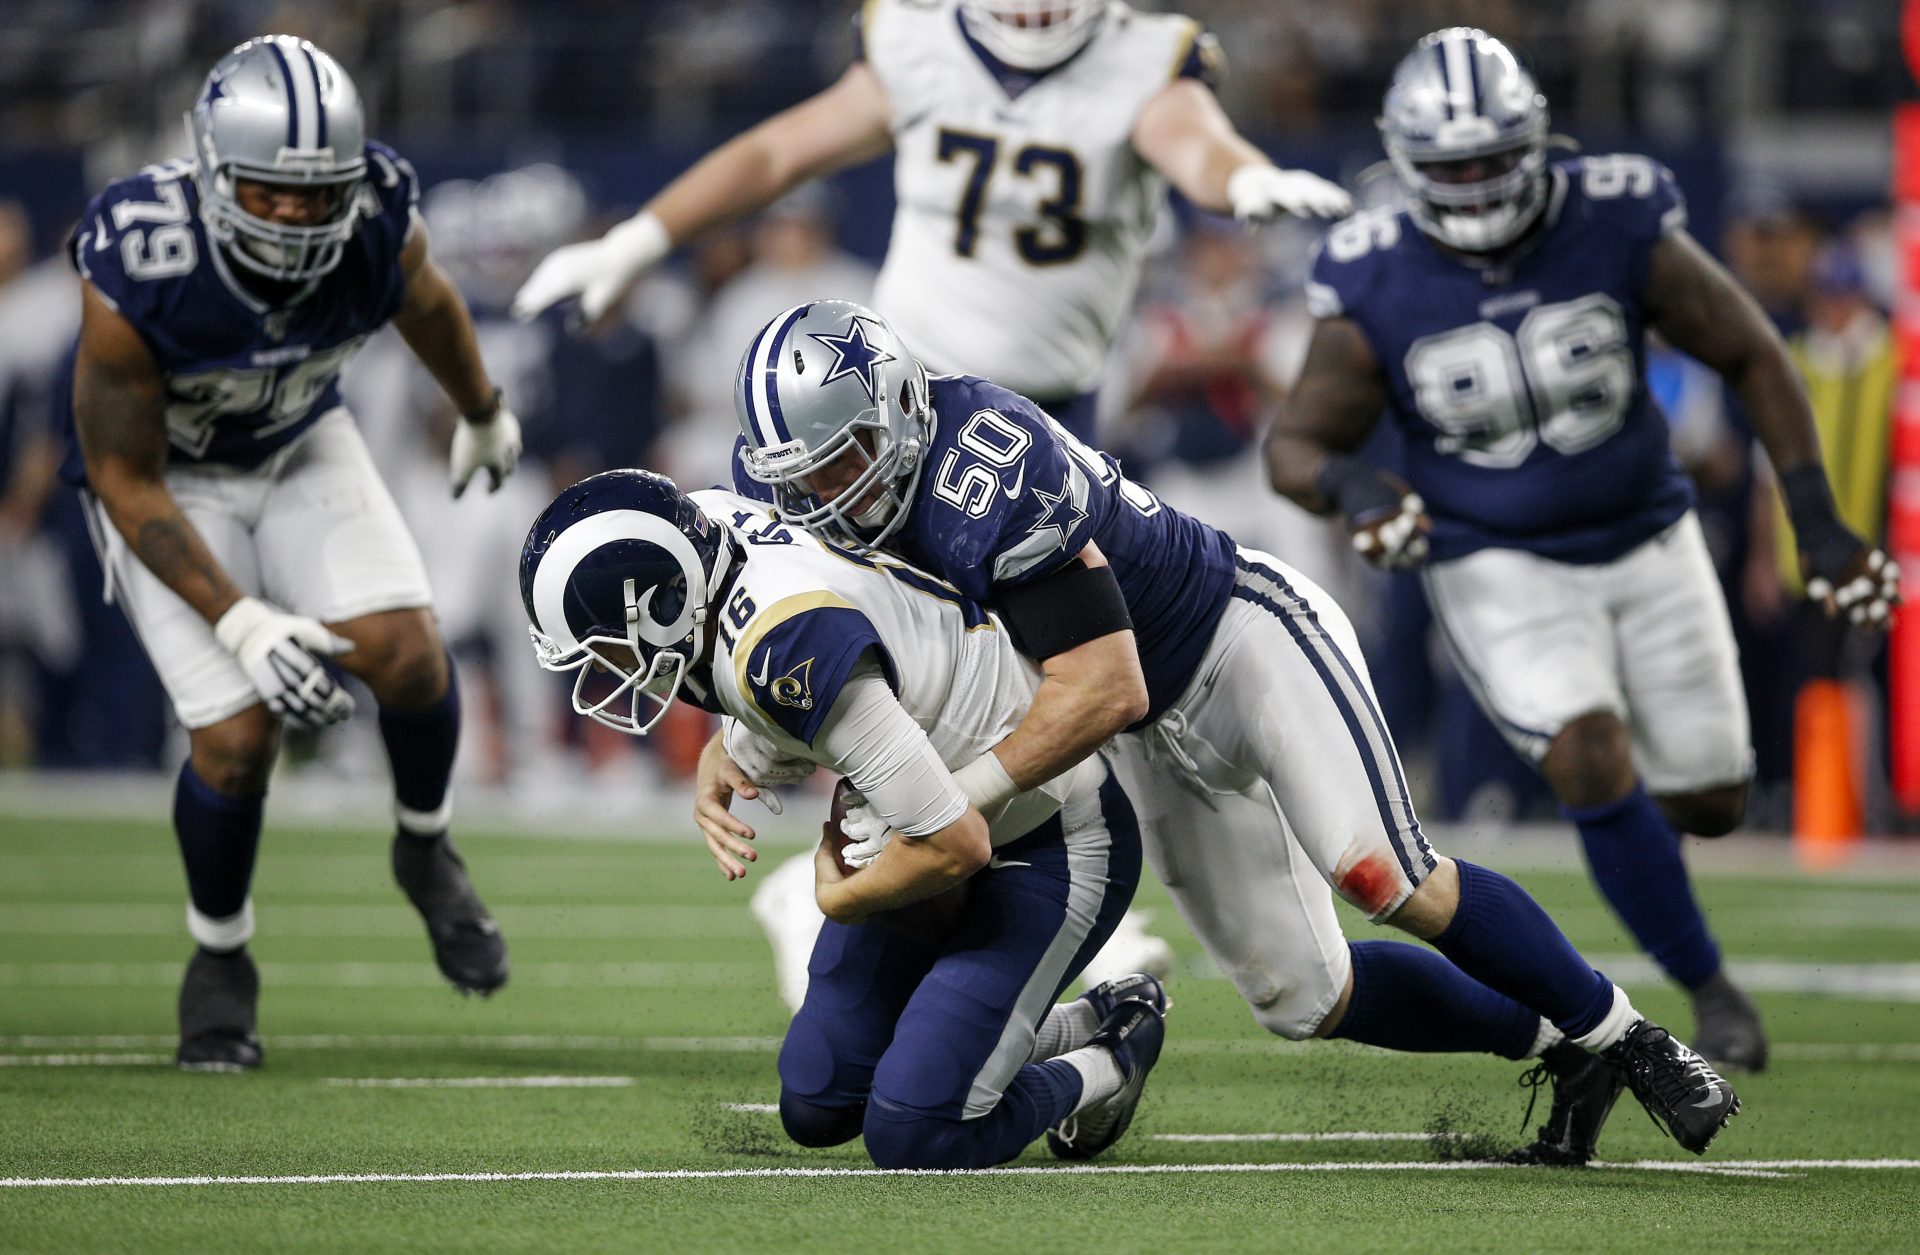 Dallas Cowboys outside linebacker Sean Lee (50) sacks Los Angeles Rams quarterback Jared Goff (16) during an NFL football game in Arlington, Texas, on Sunday, Dec. 15, 2019